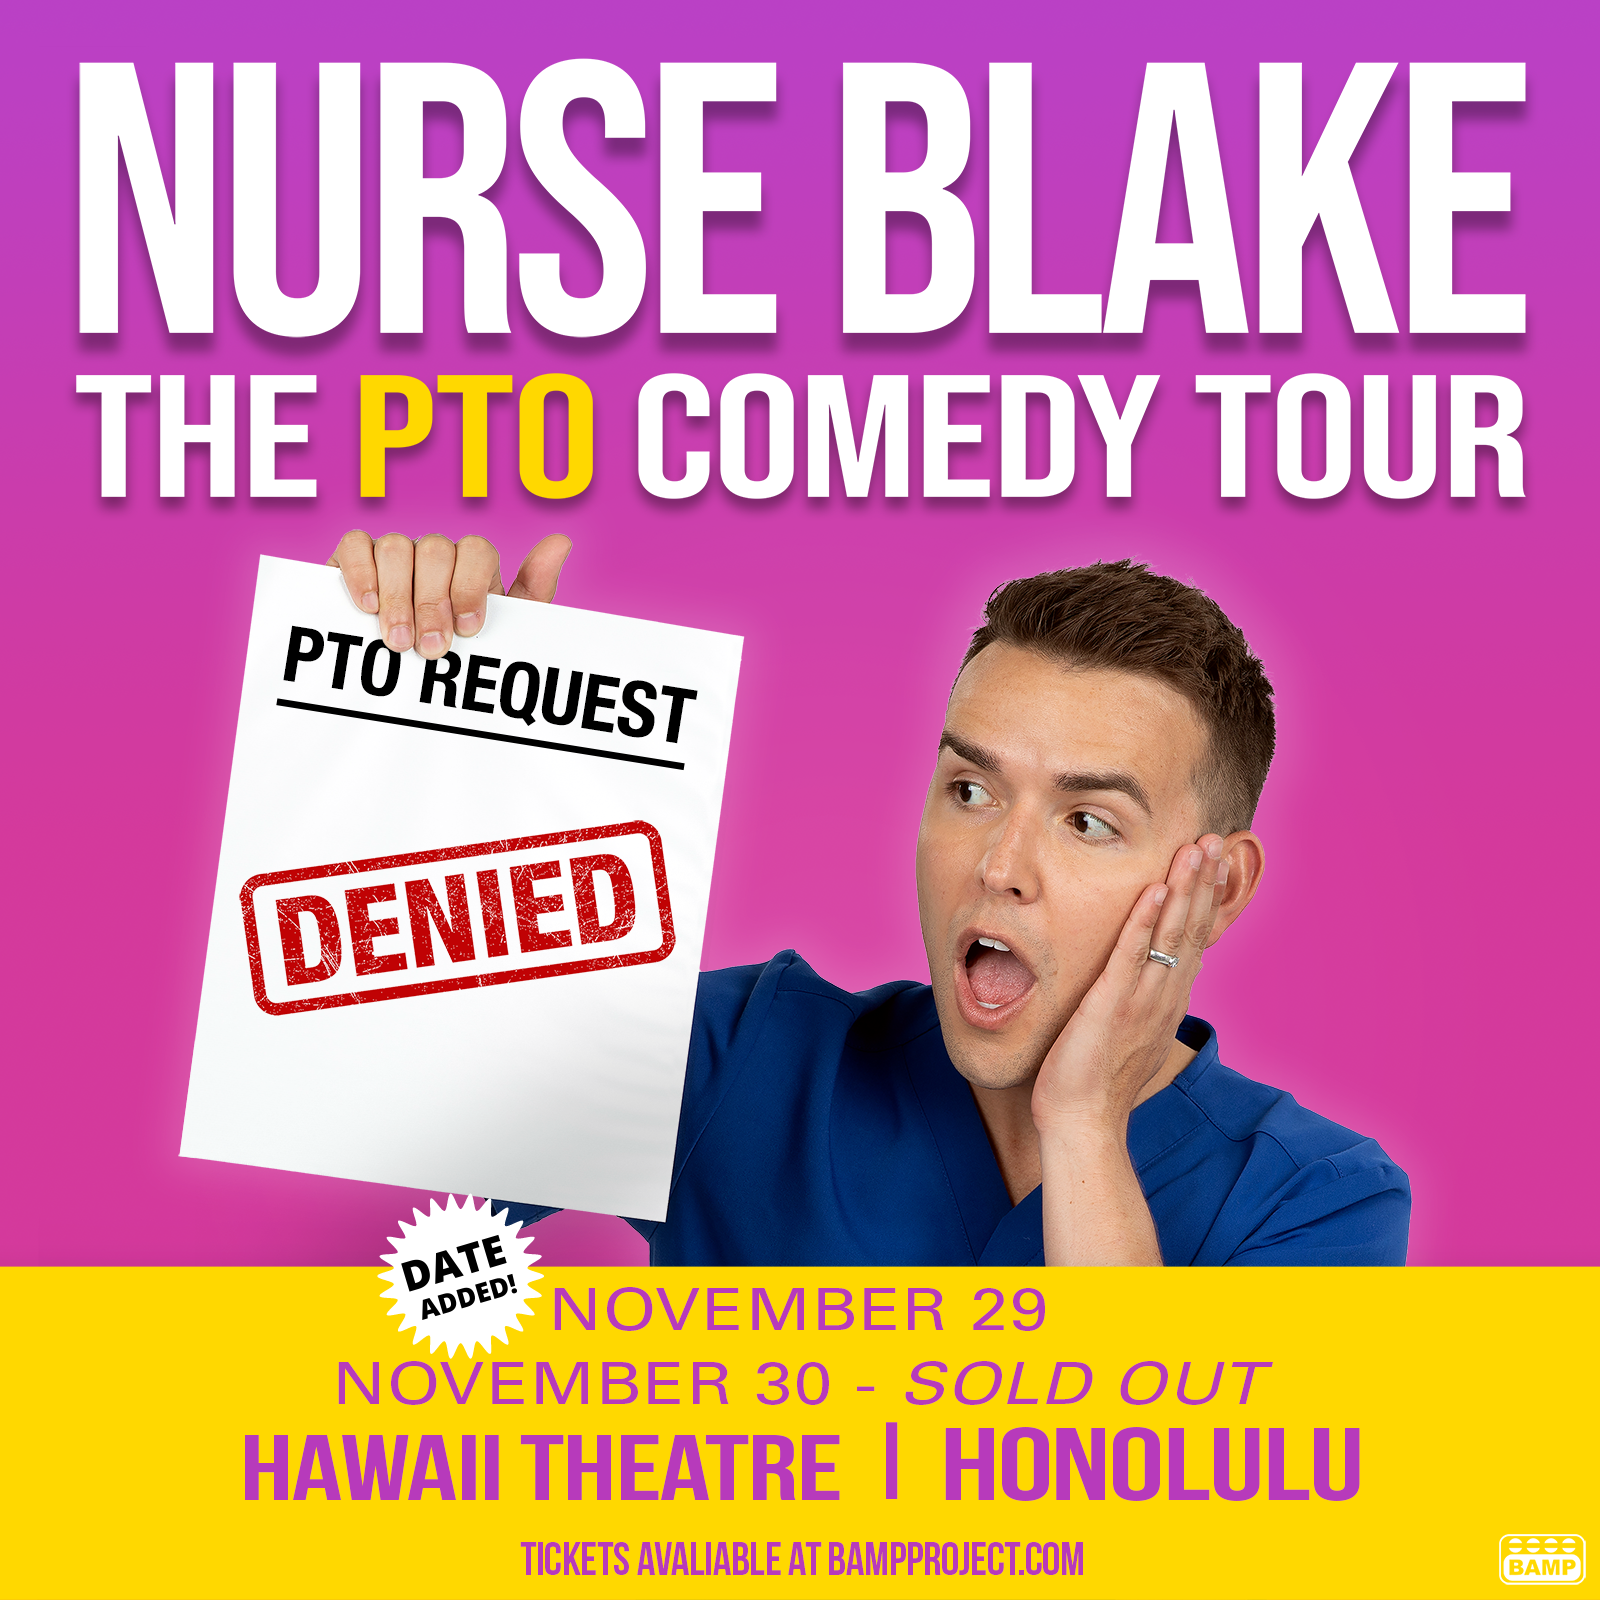 NurseBlake_PTO-ComedyTour_Square_HNL_DATE ADDED